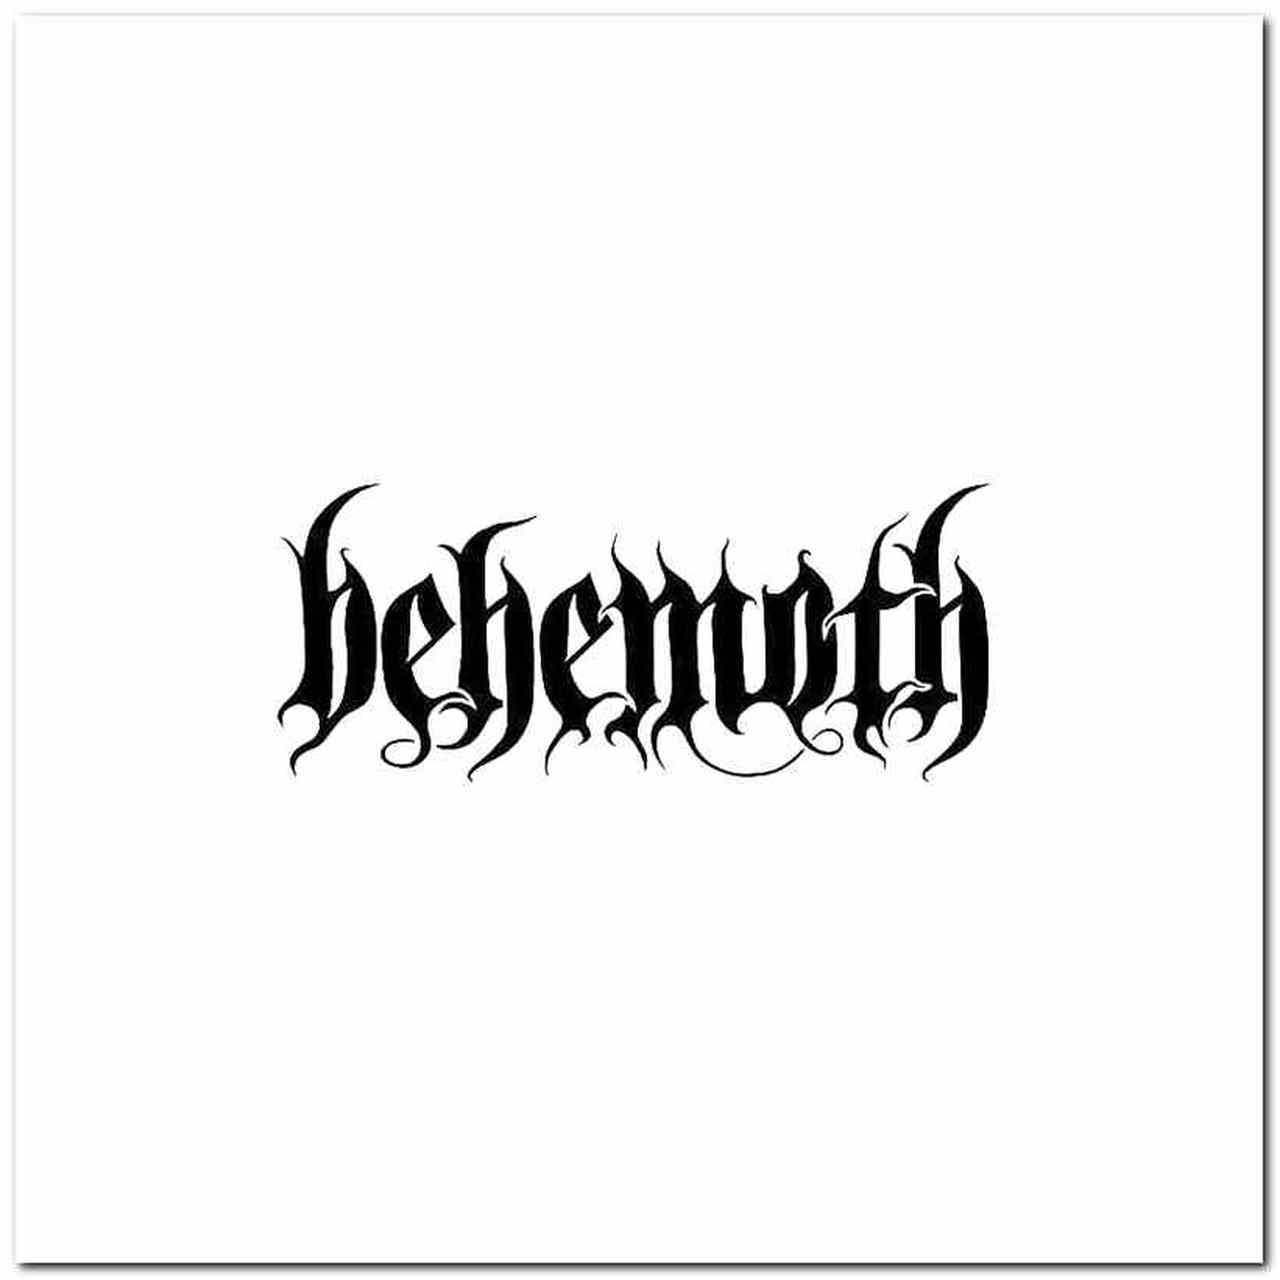 Behemoth Logo - Behemoth Band Decal Sticker